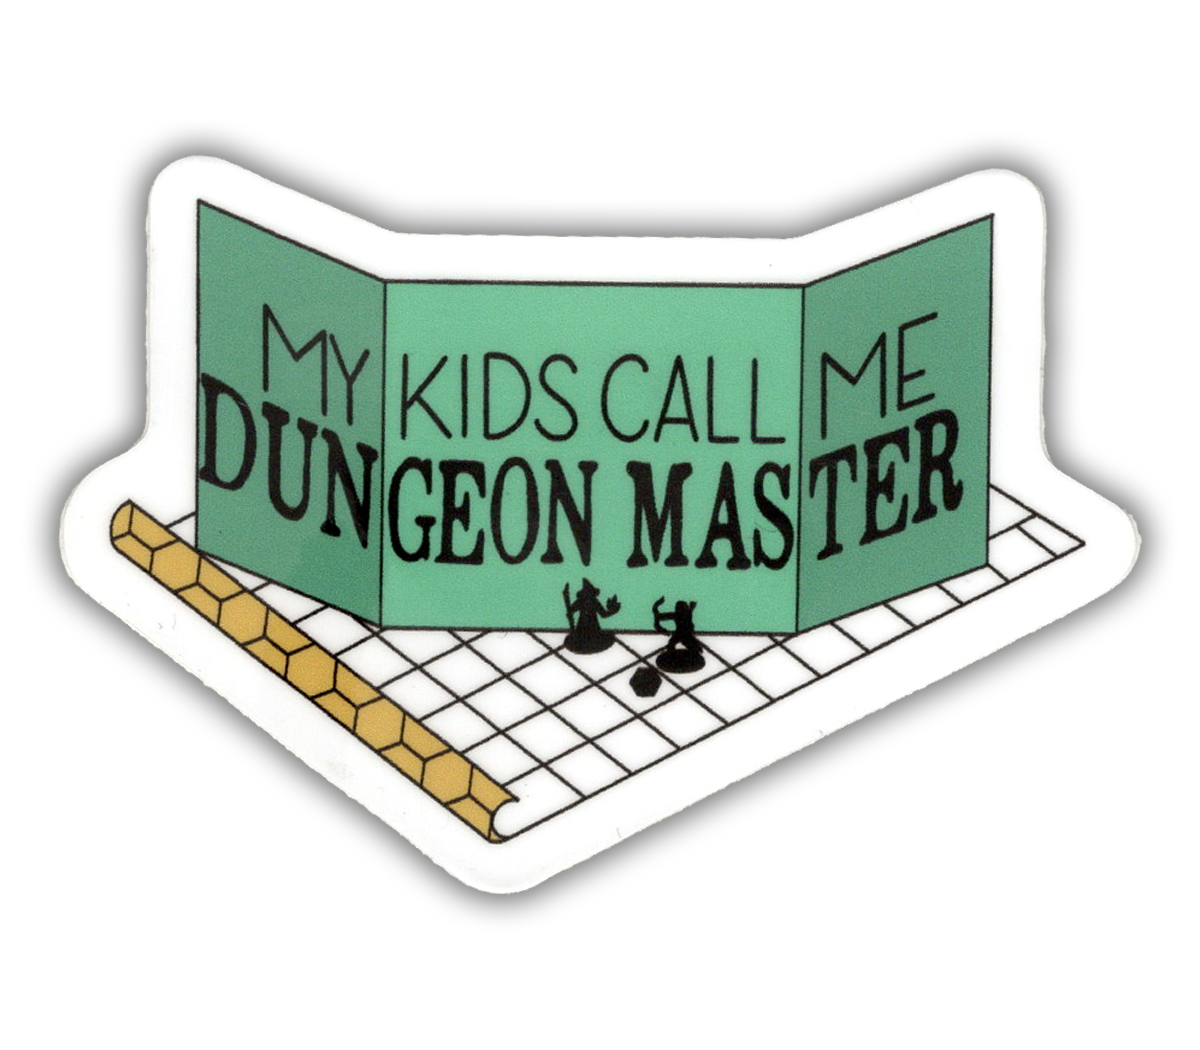 My Kids Call Me Dungeon Master - D&D vinyl sticker - waterproof, UV-proof